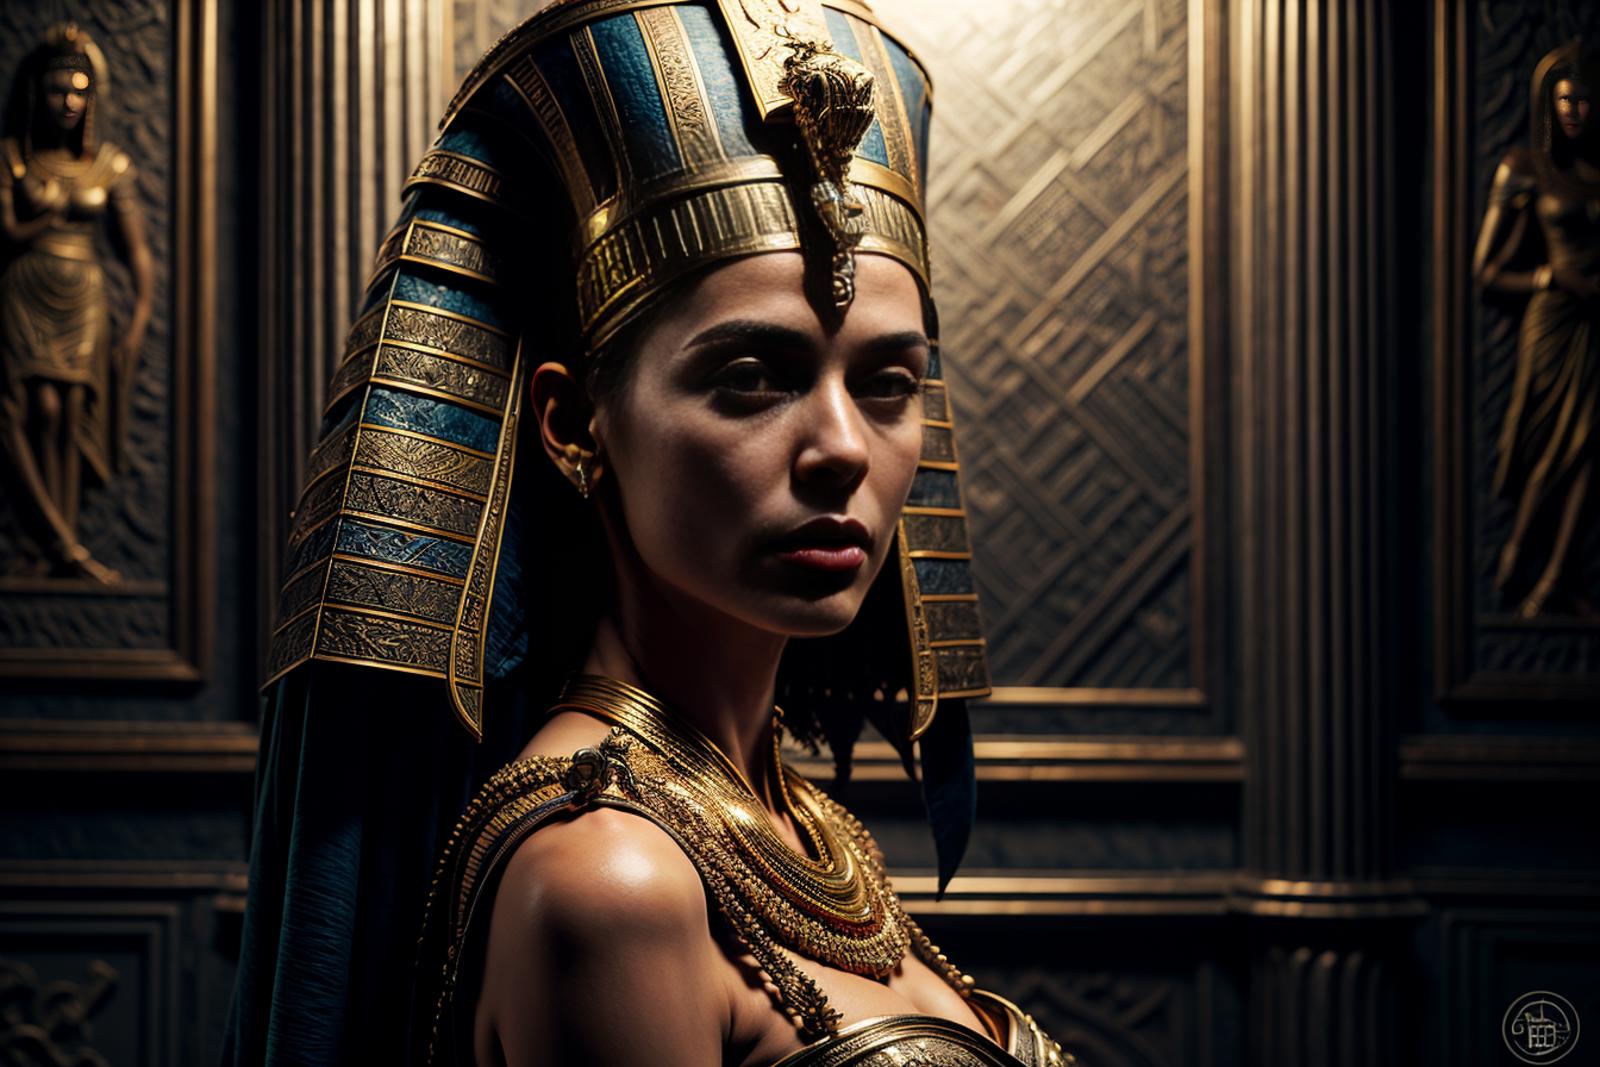 PharaohX image by dschonich